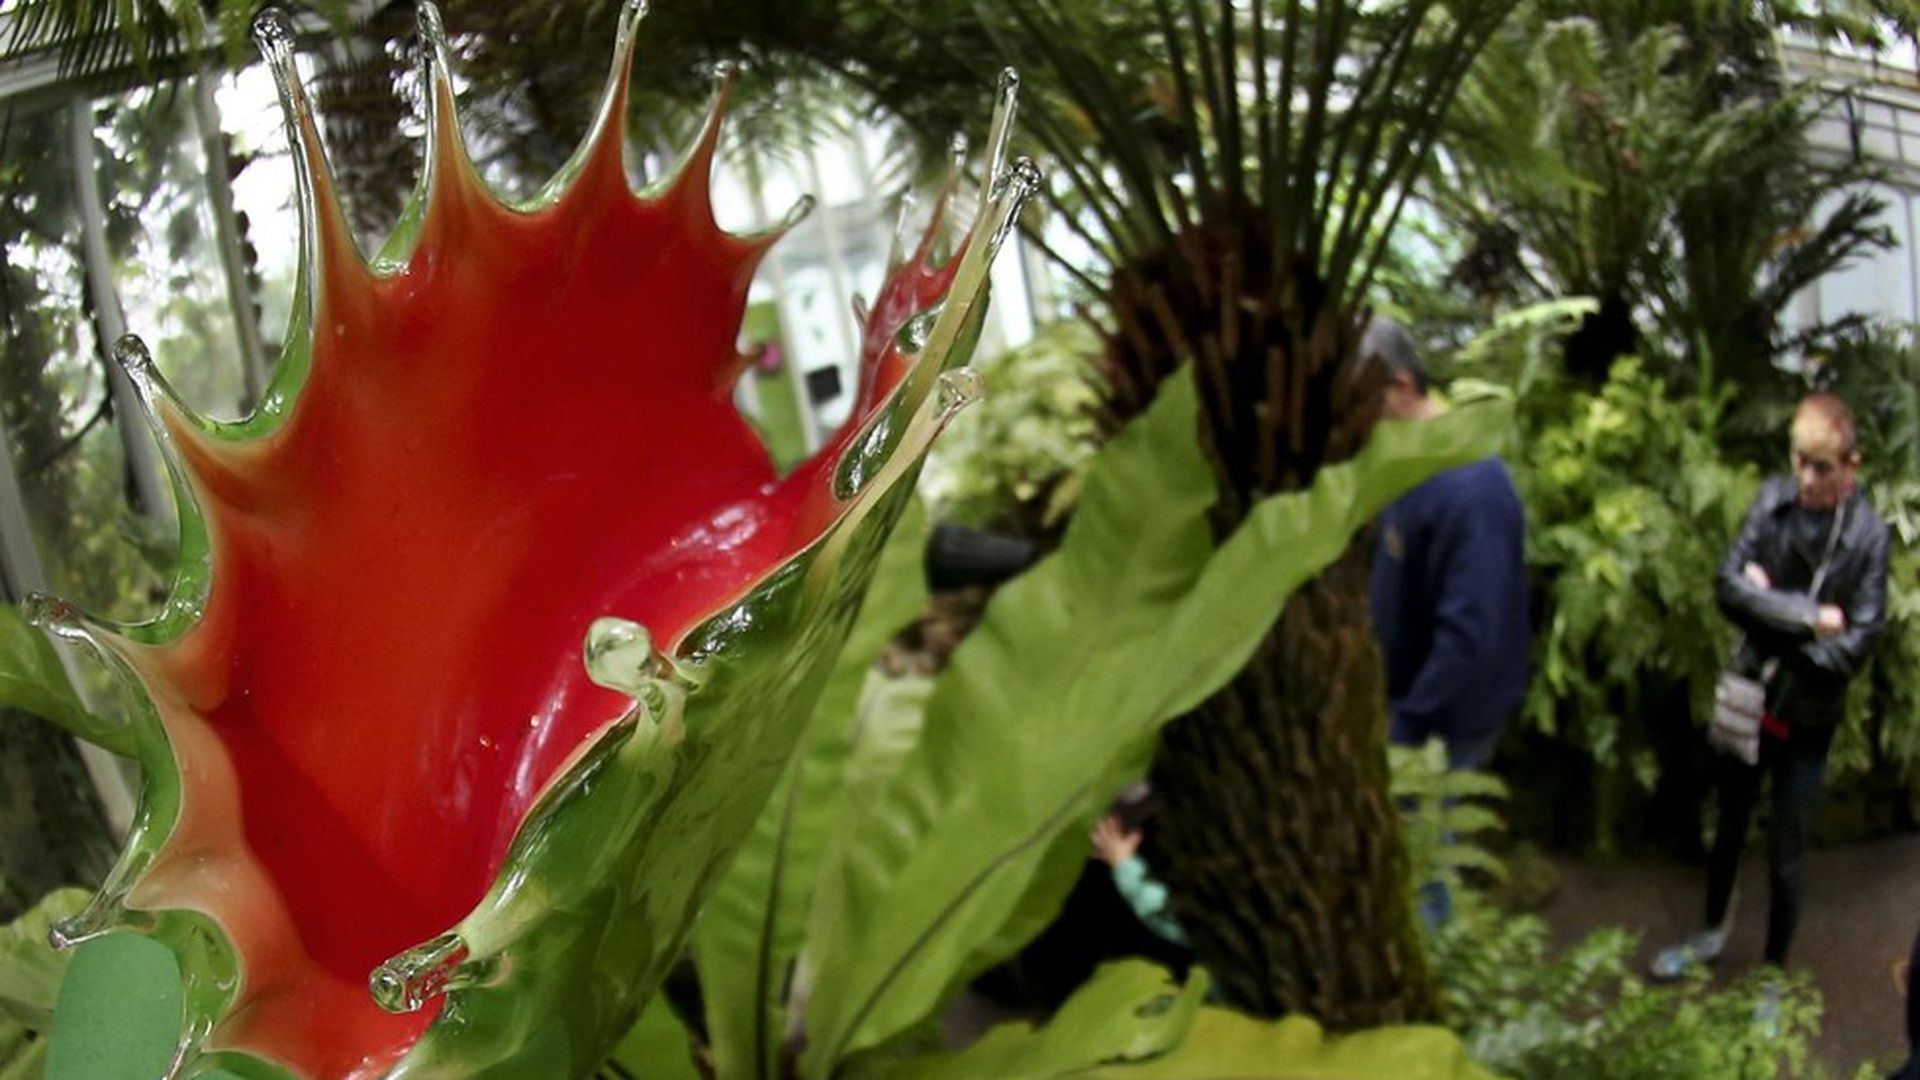 Scientists have created an artificial Venus flytrap